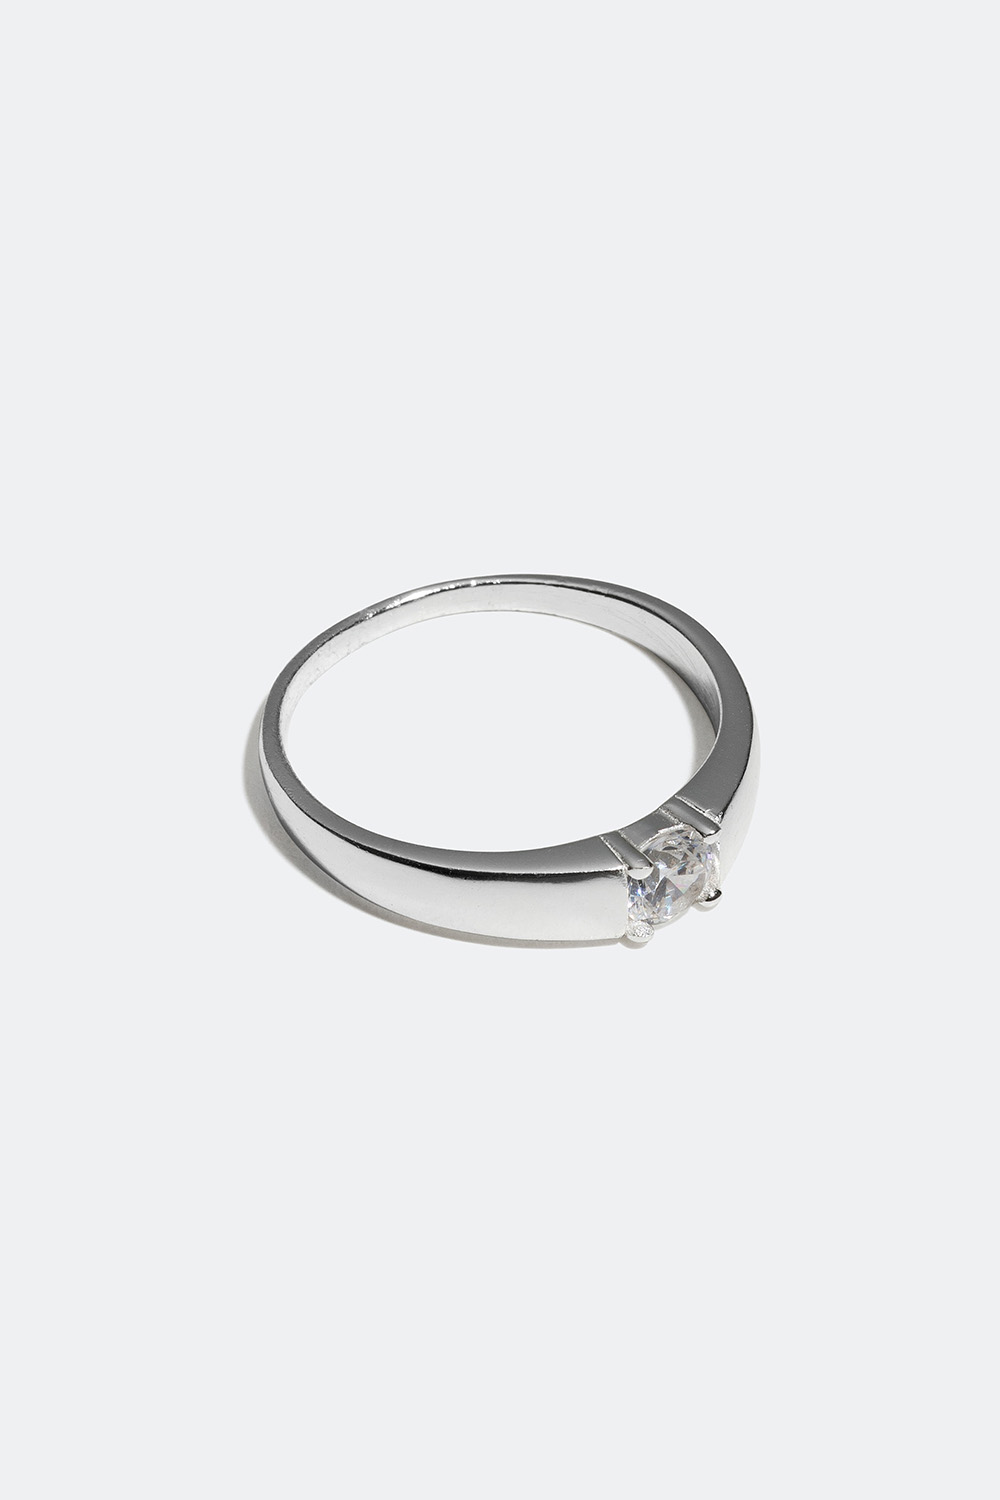 Glat ring i ægte sølv med Cubic Zirconia sten i gruppen Ægte sølv / Sølvringe / Sølv hos Glitter (55600054)